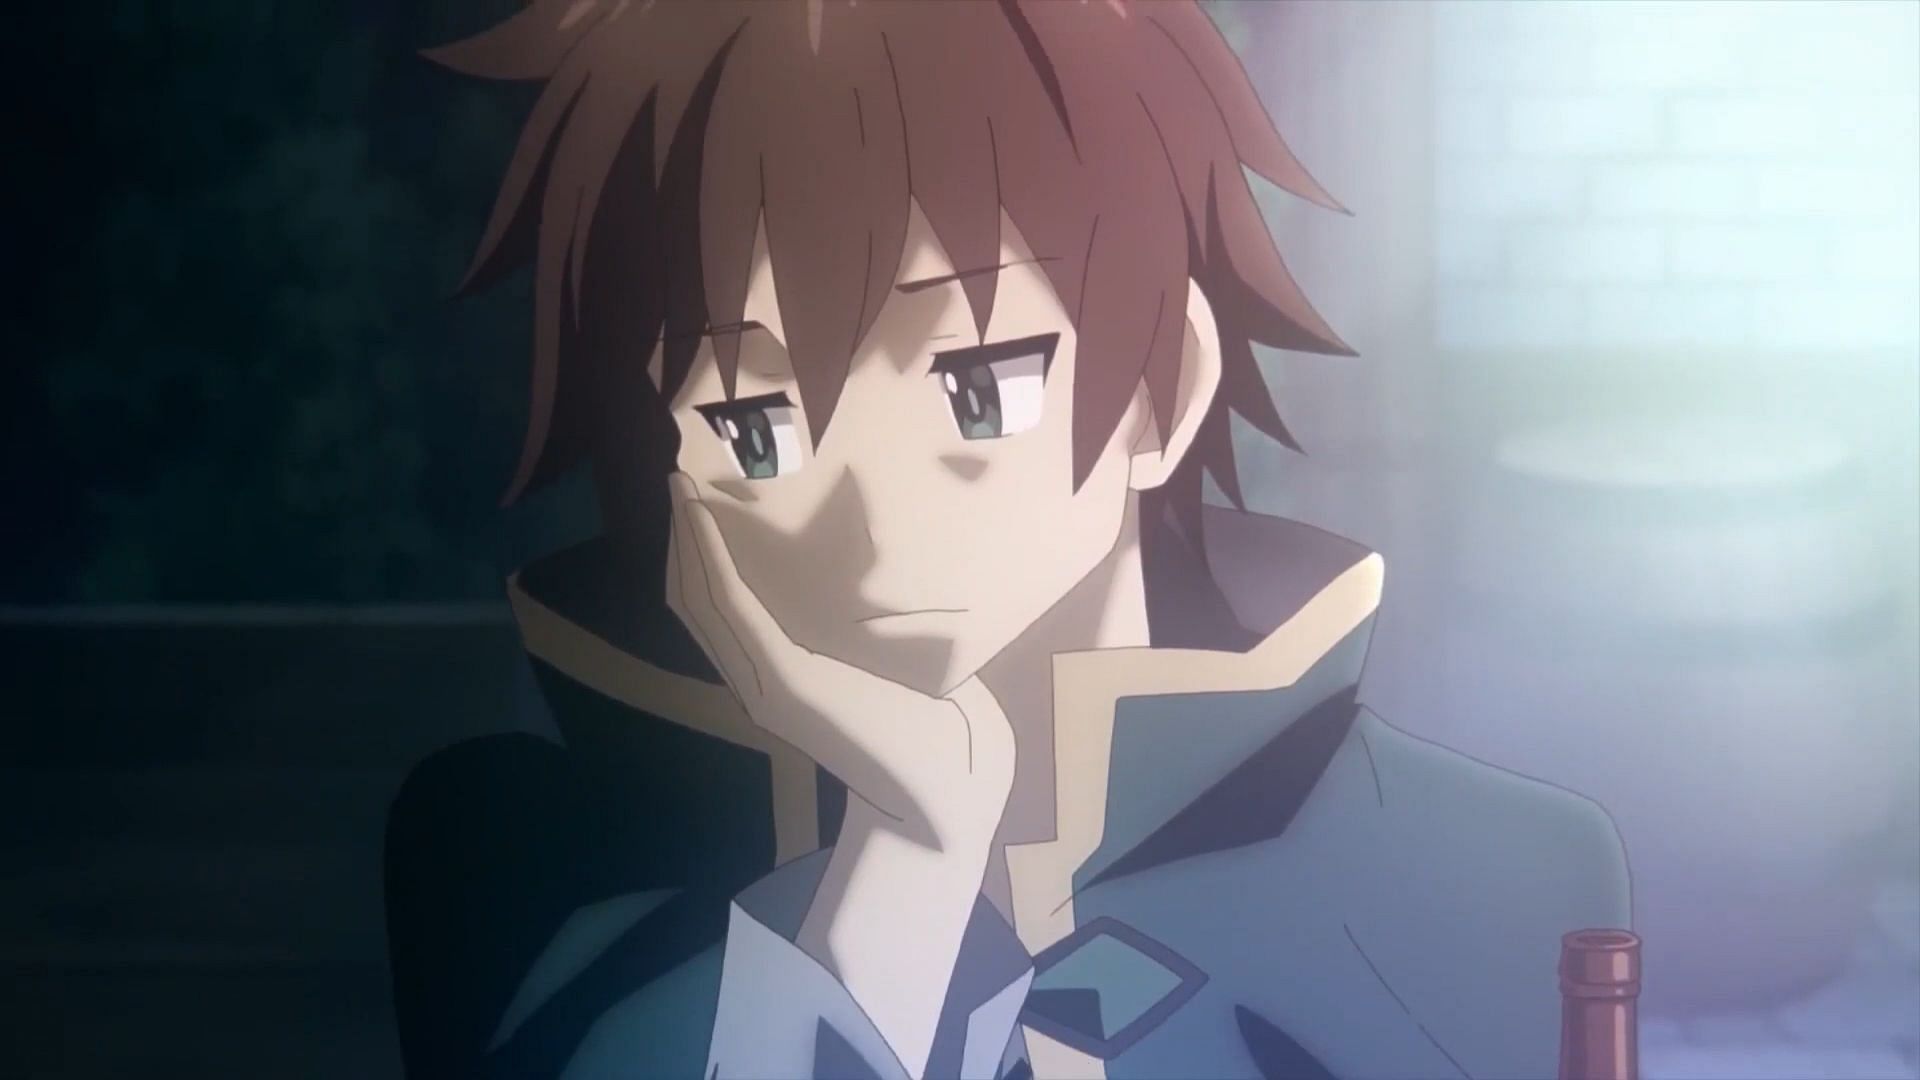 Kazuma, as seen in the anime series (Image via Drive and Studio Deen)